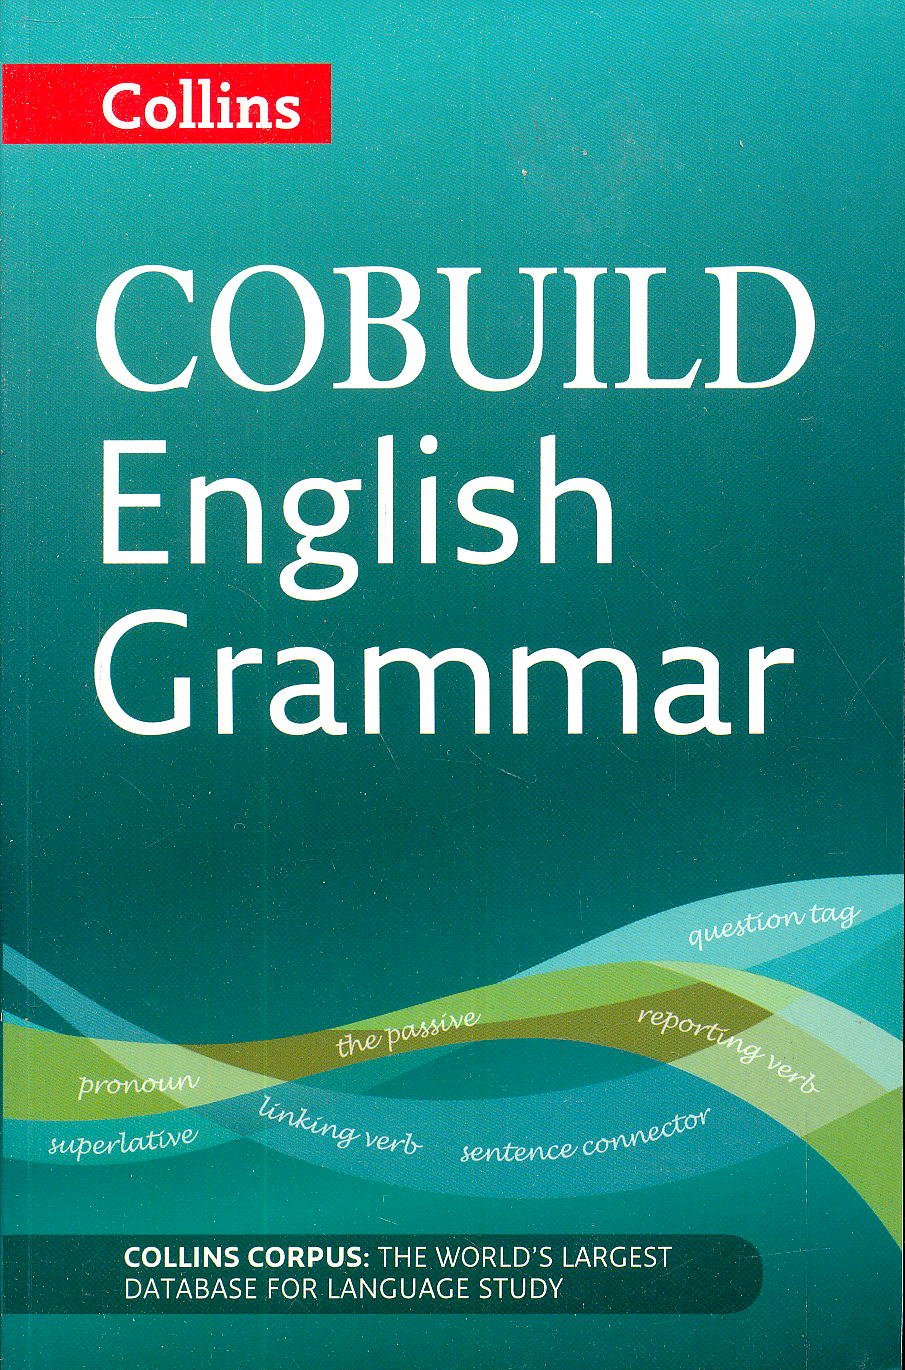 Collins Cobuild English Grammar柯林斯COBUILD英语语法词典 英文原版 kindle格式下载